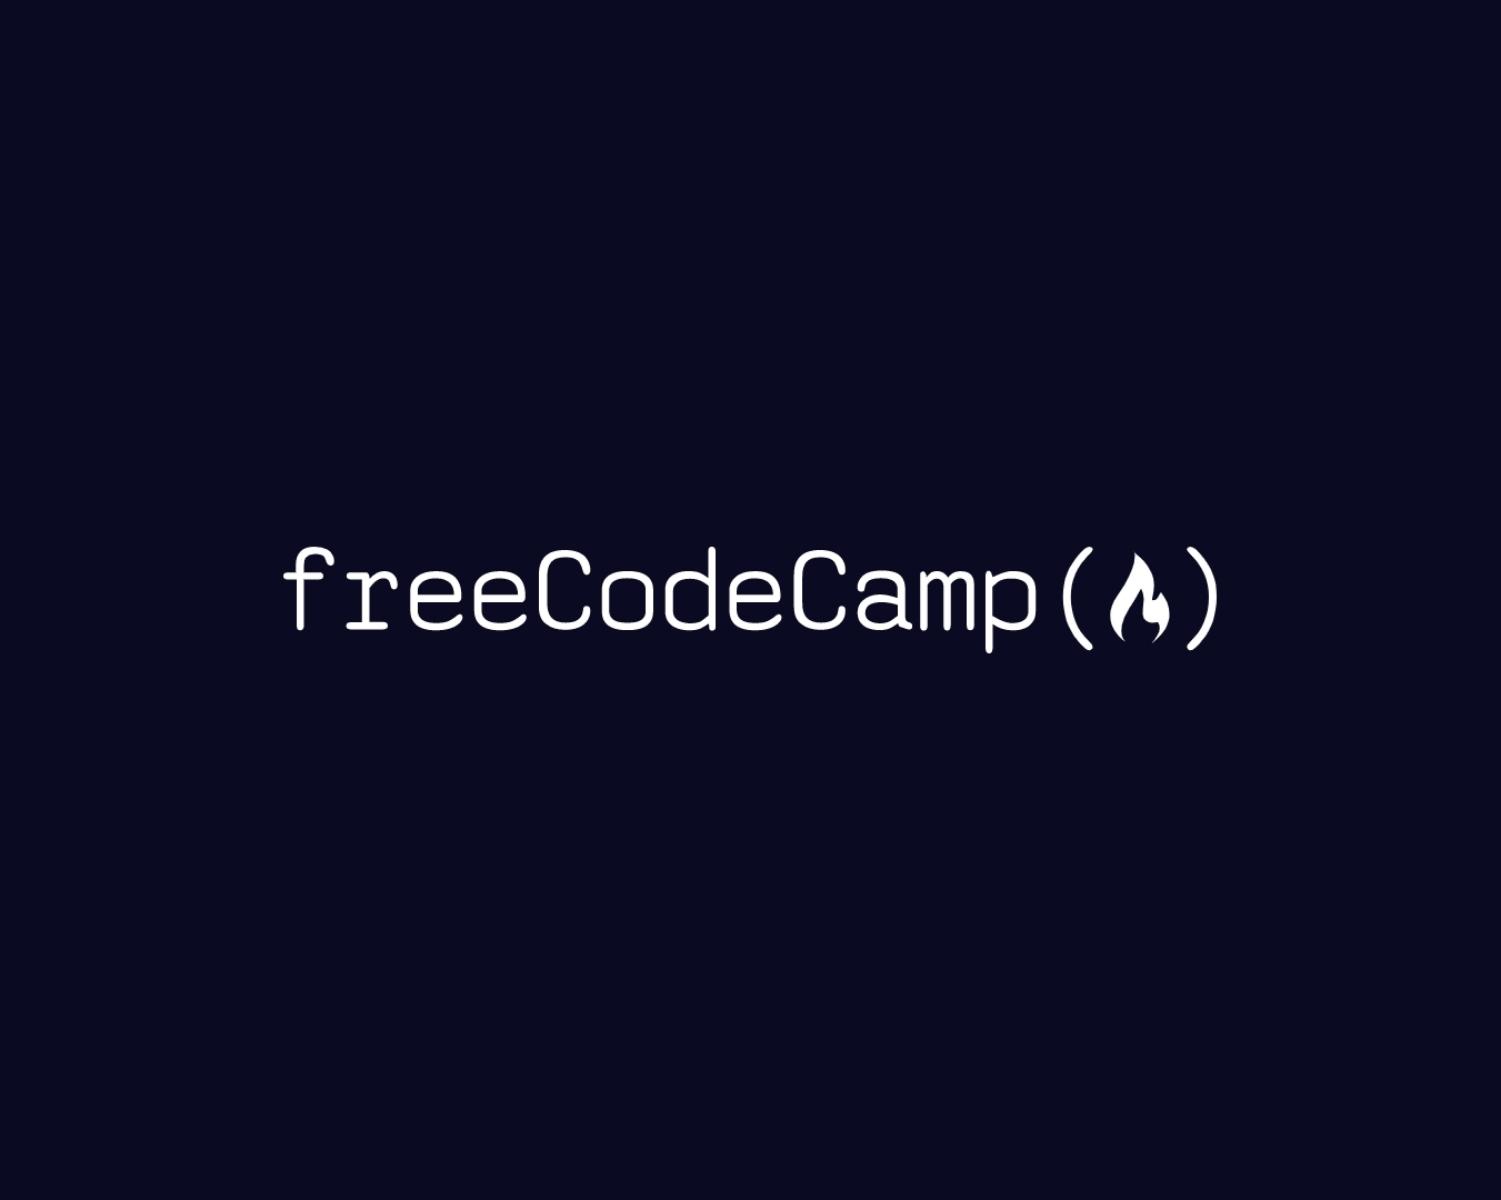 FREE CODE CAMP